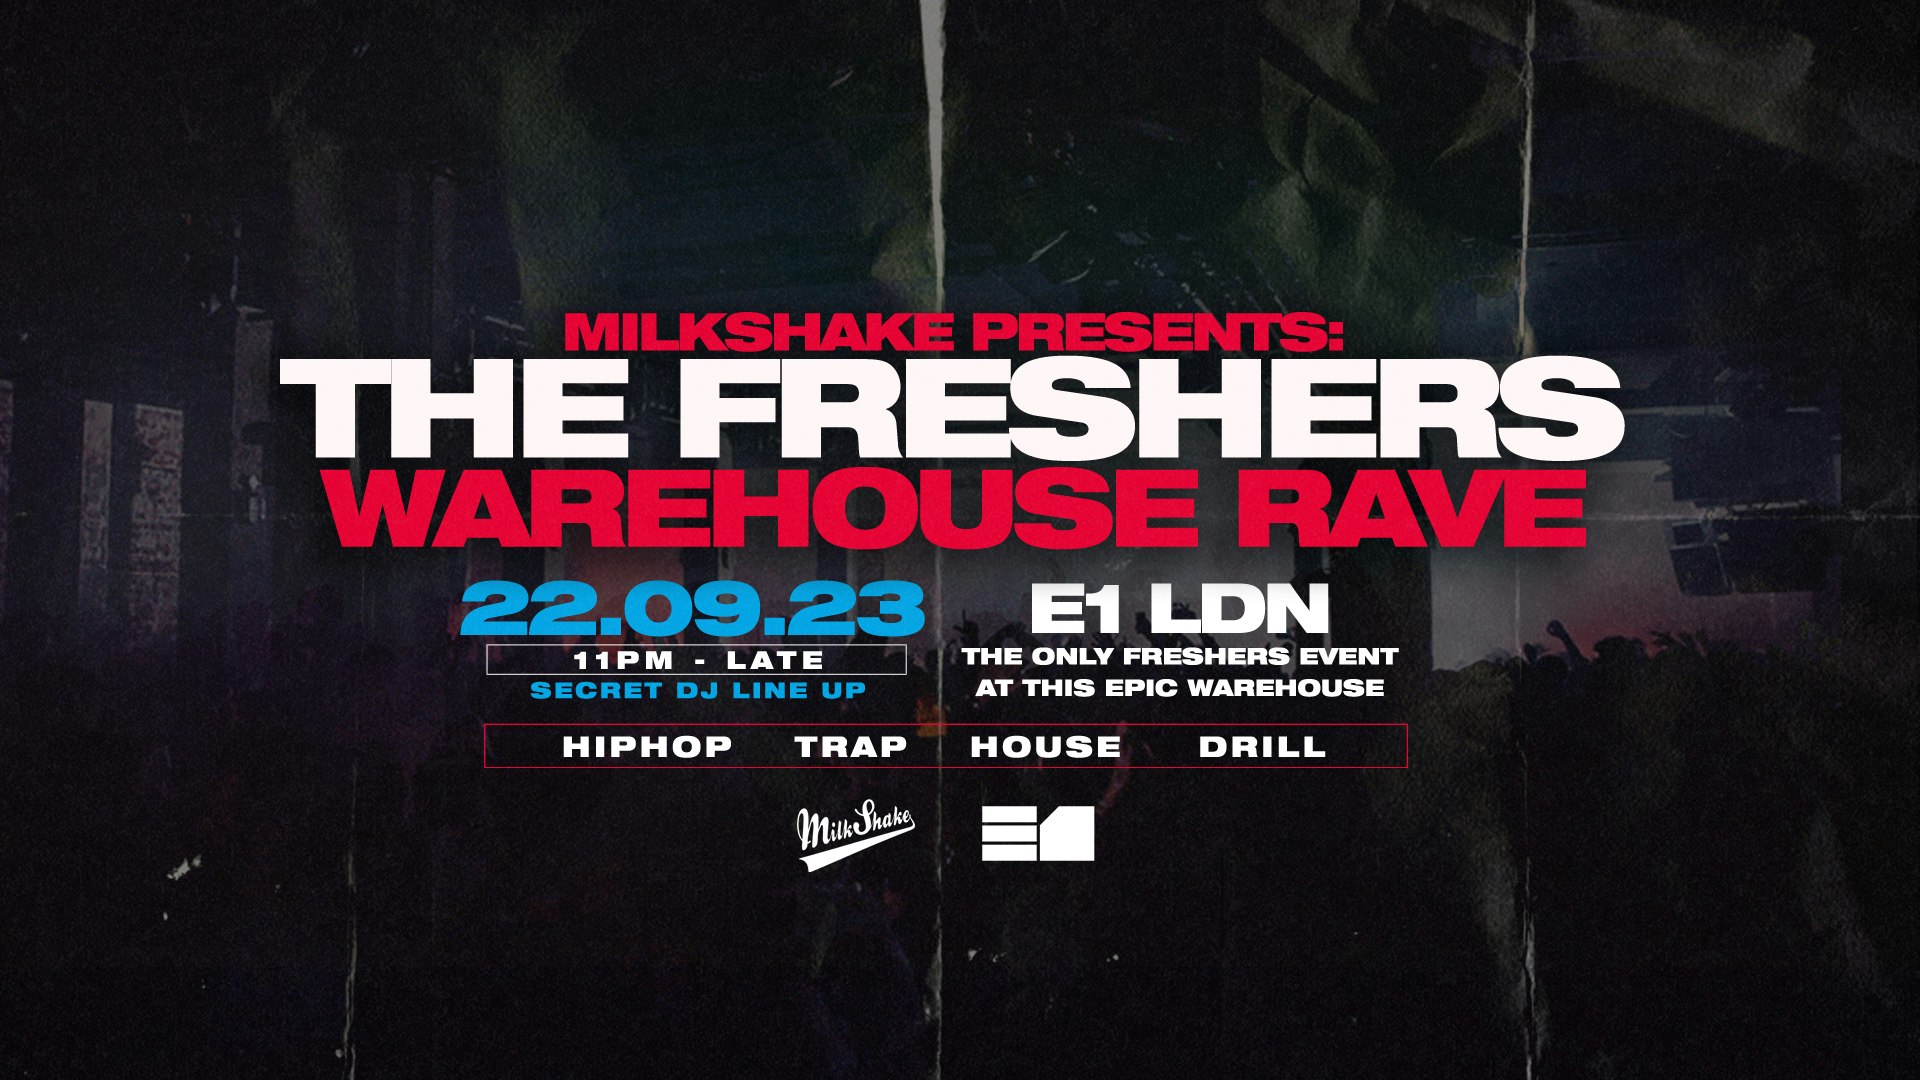 TONIGHT 10PM – The Freshers Warehouse Rave @ E1 LONDON